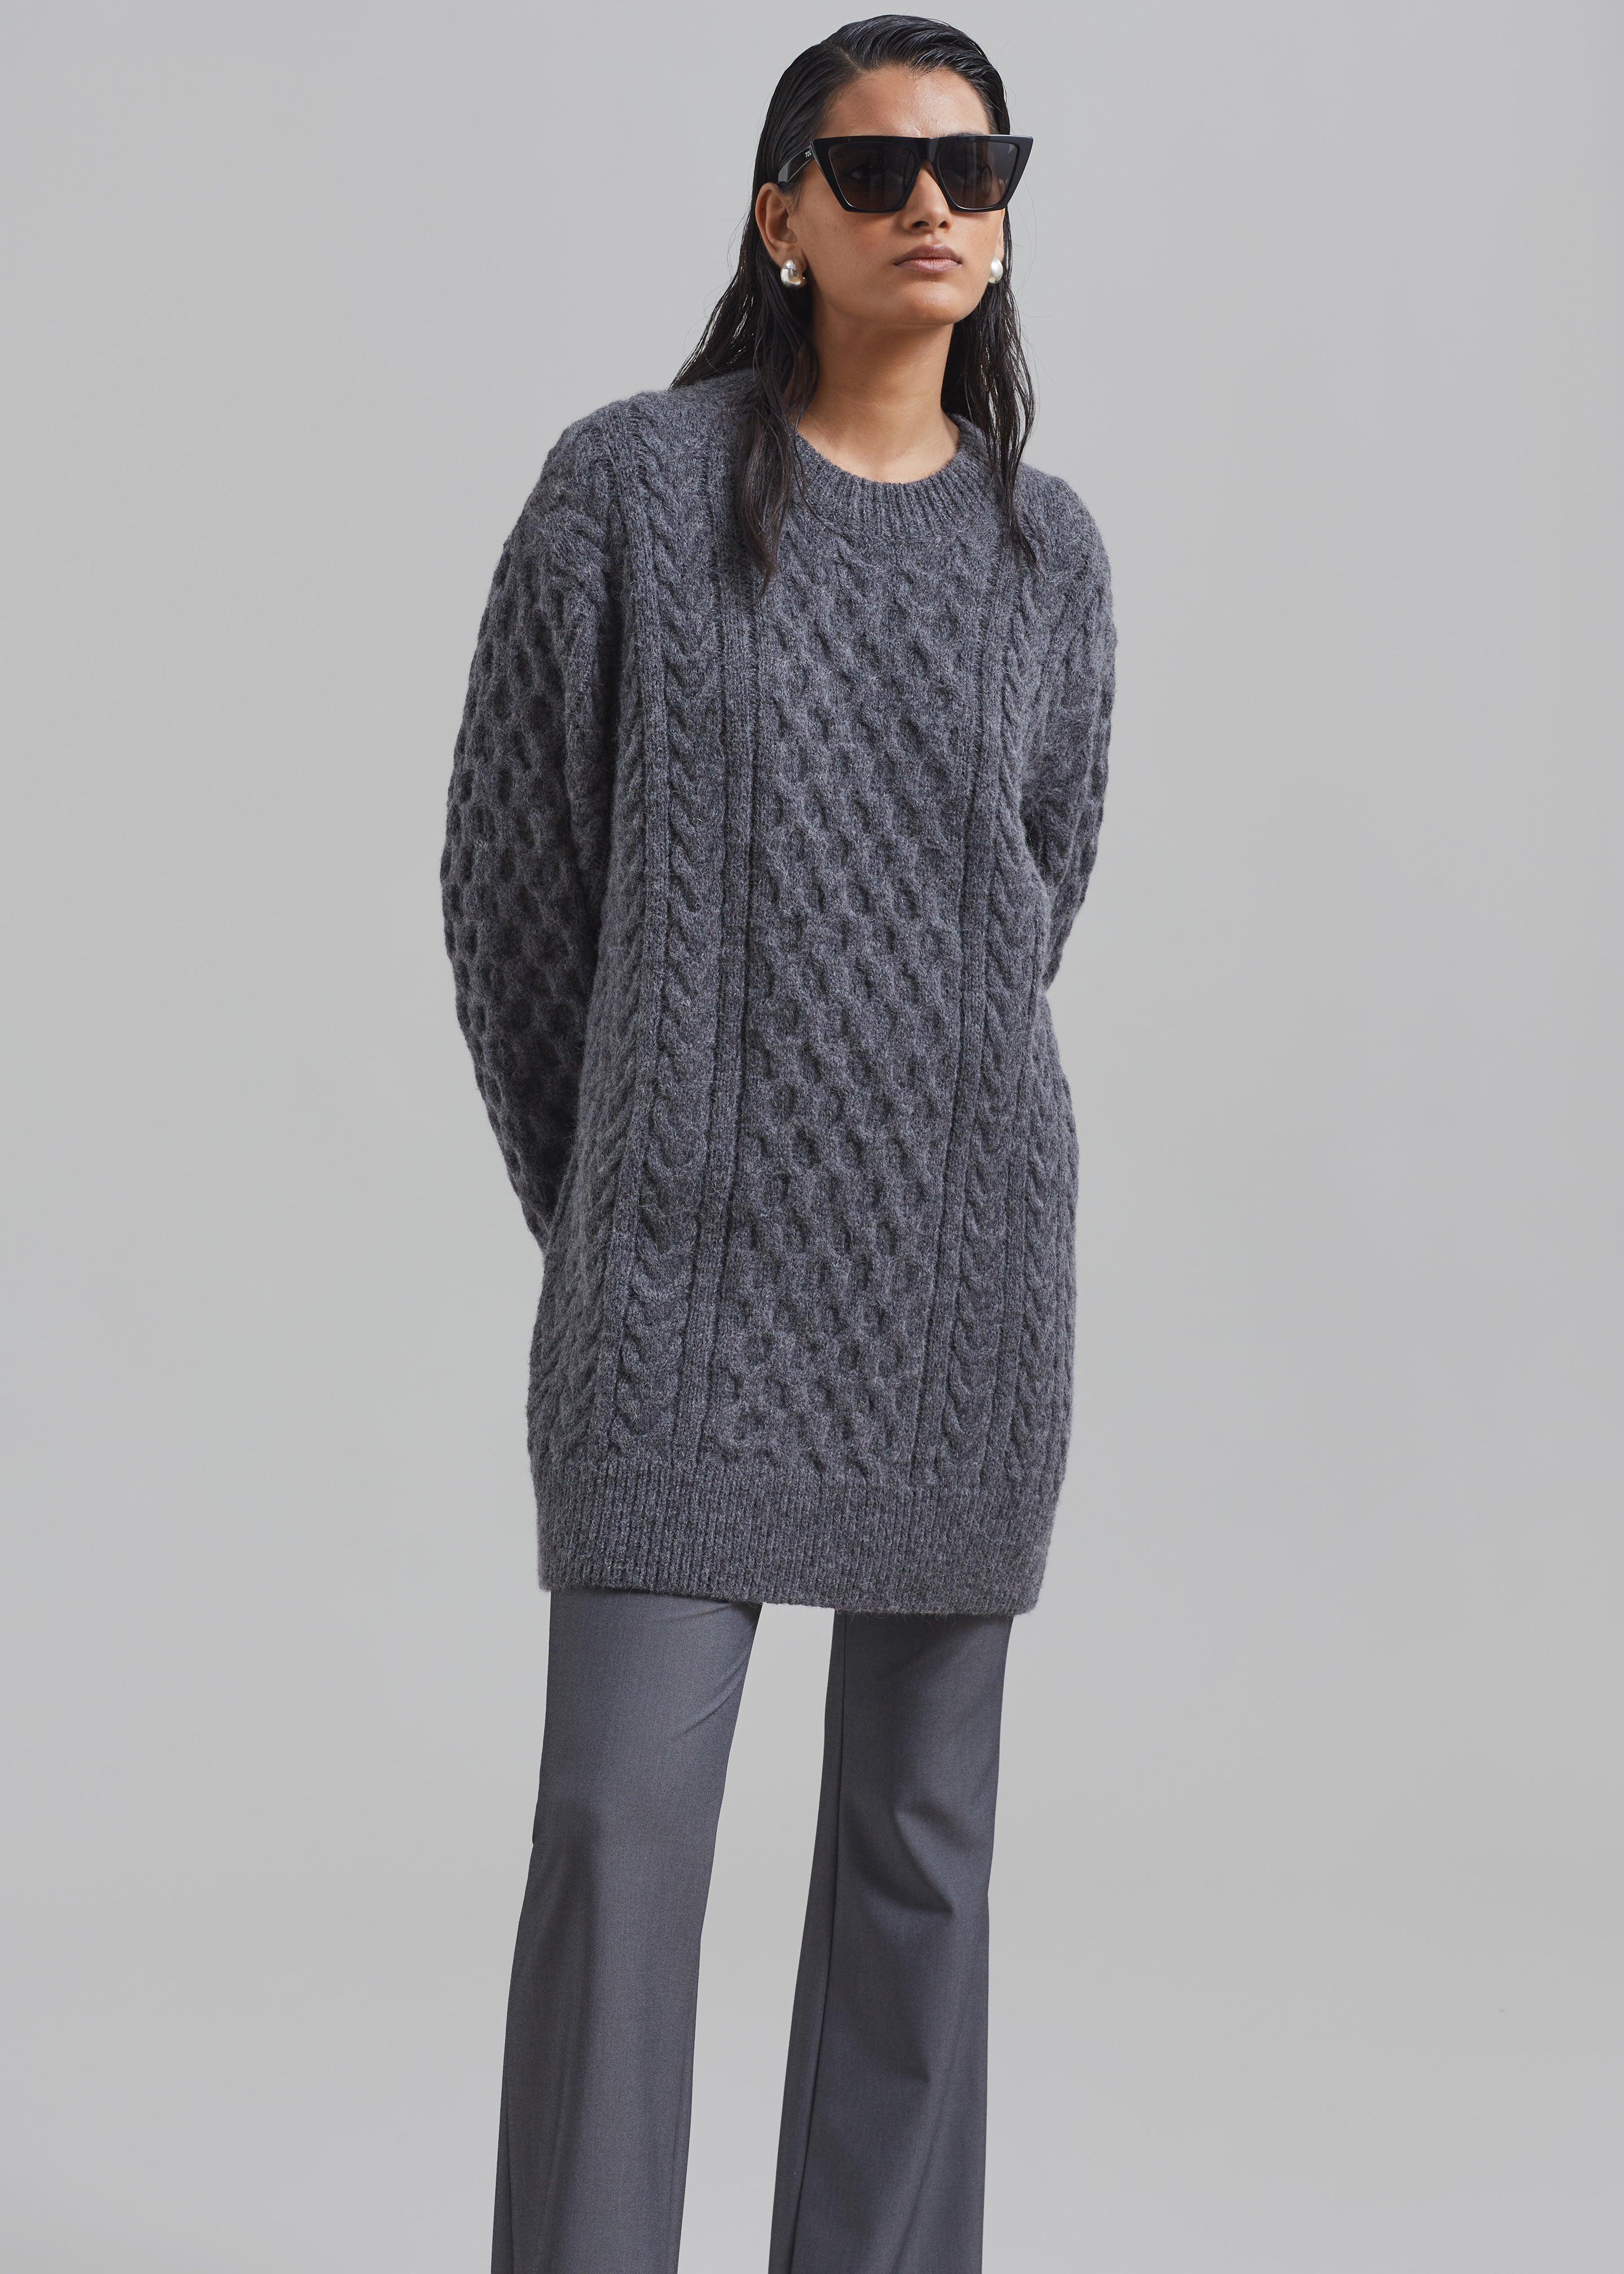 Leighton Braided Knit Sweater - Grey - 1